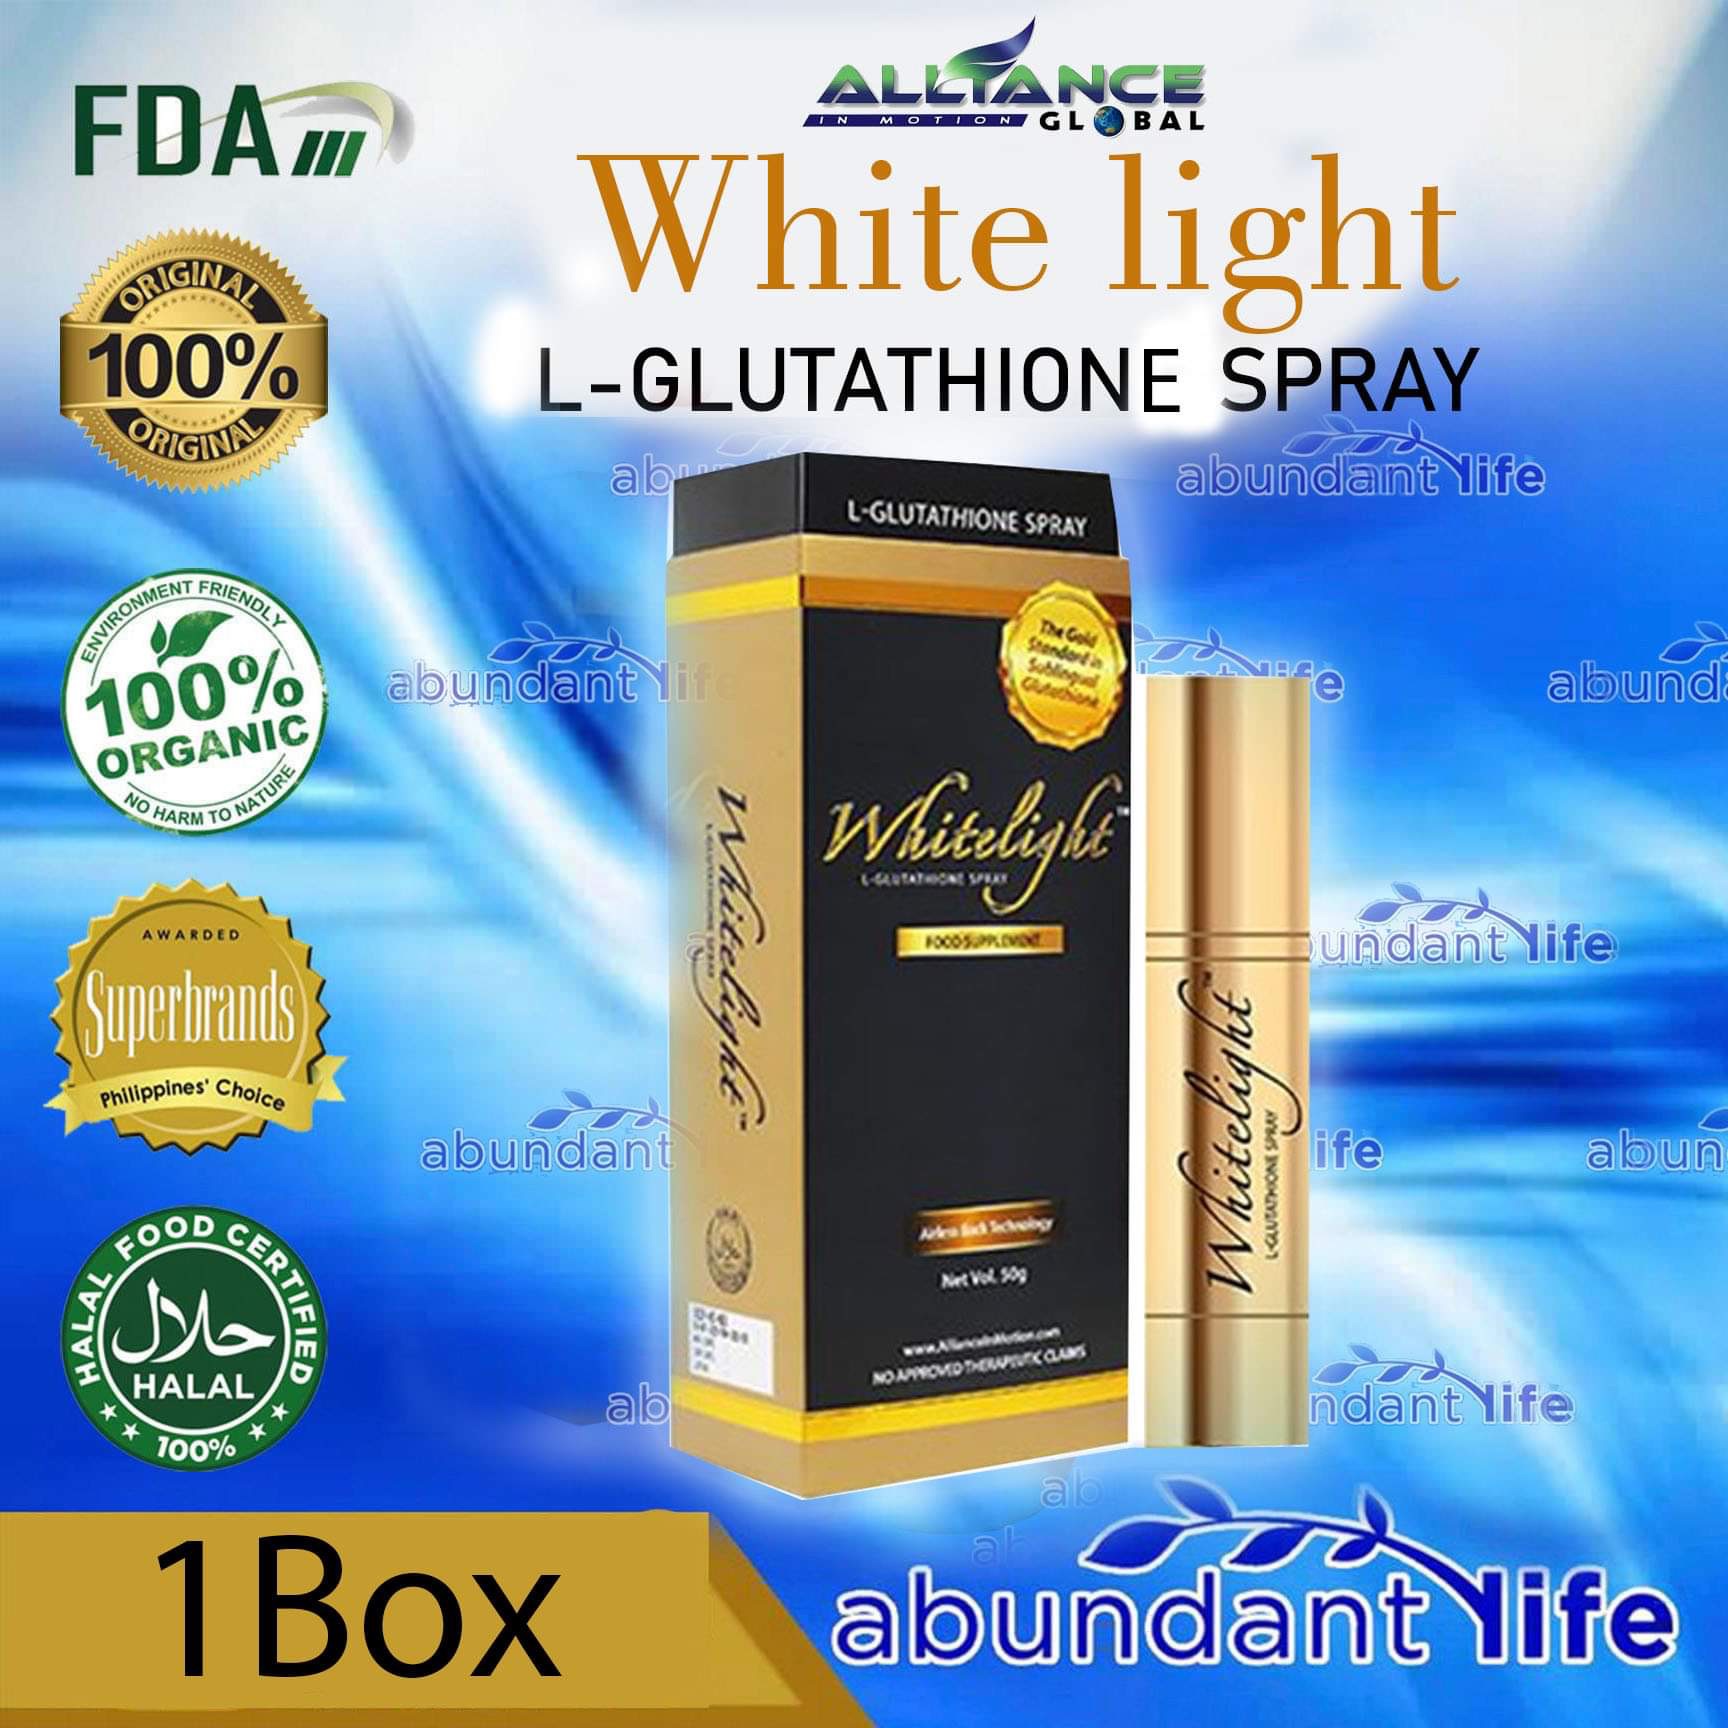 Authentic Aim Global Whitelight Glutathione Spray by Abundant Life